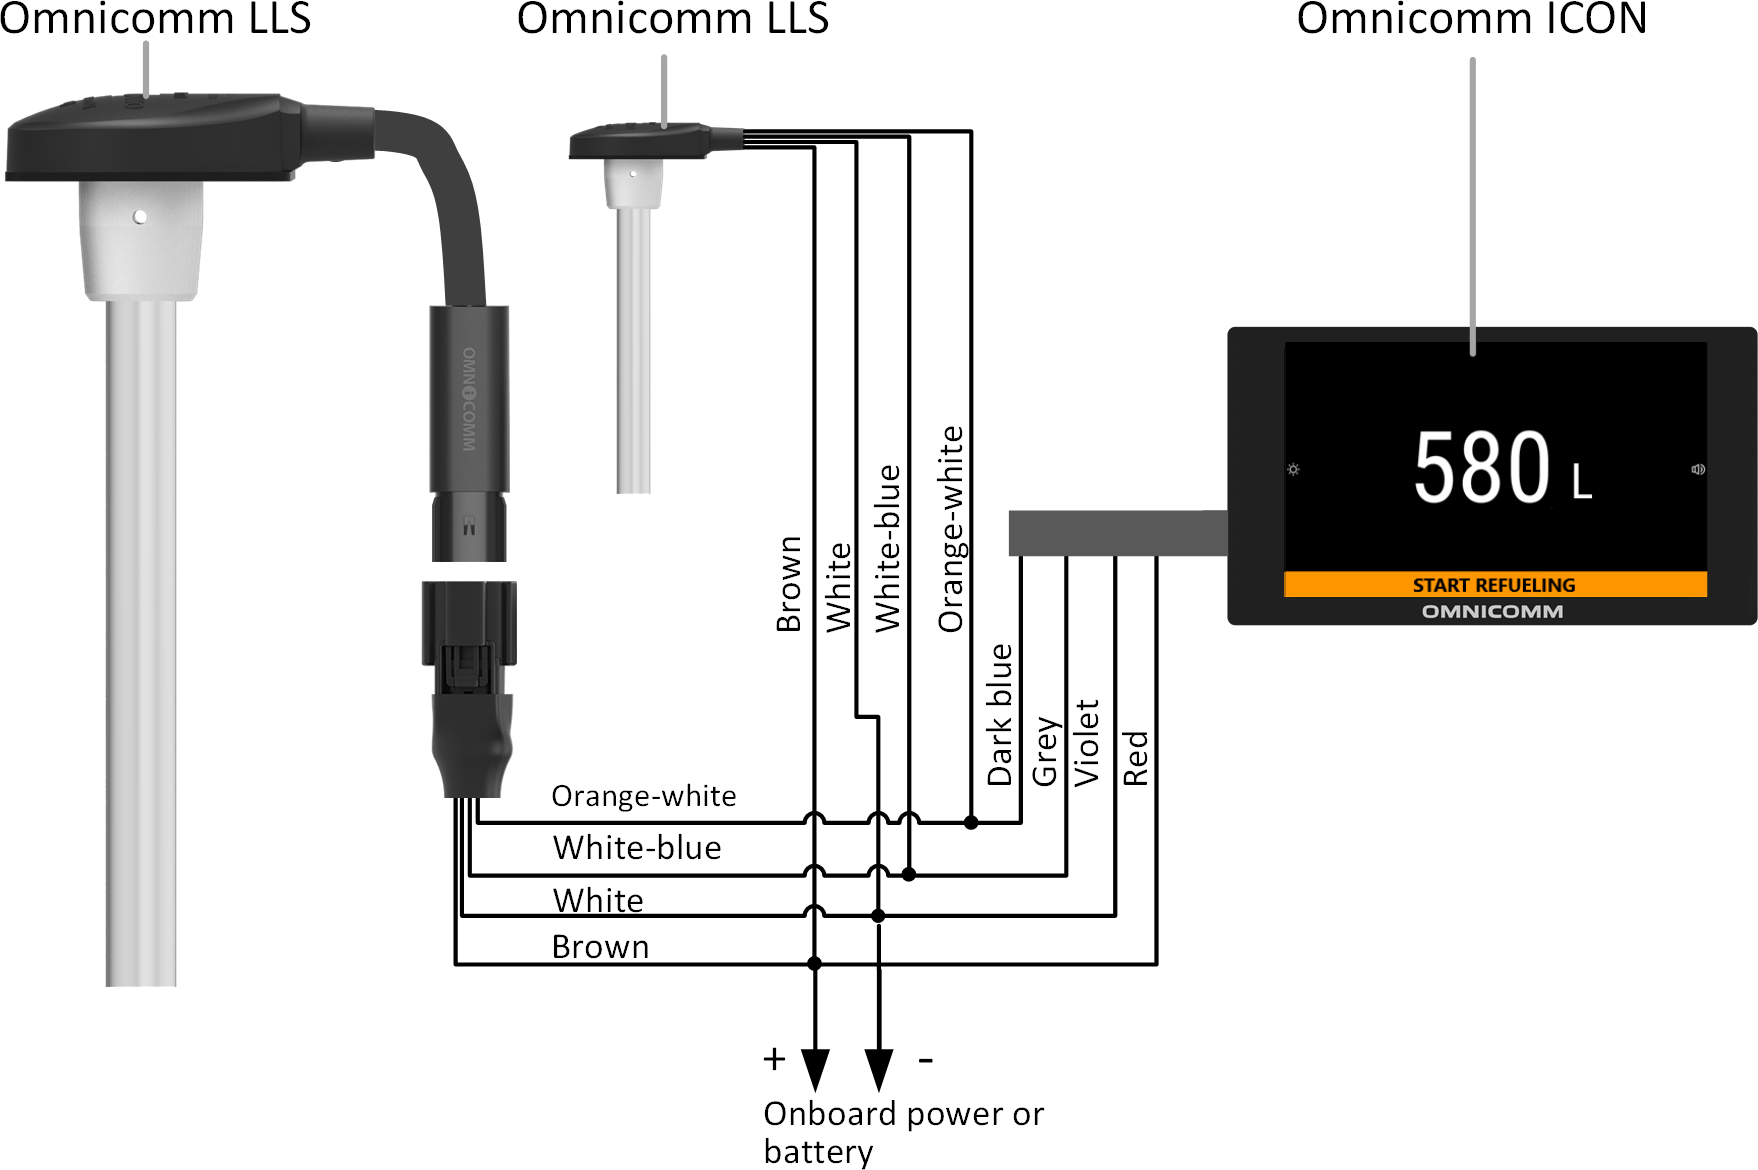  Connect several Omnicomm LLS sensors  